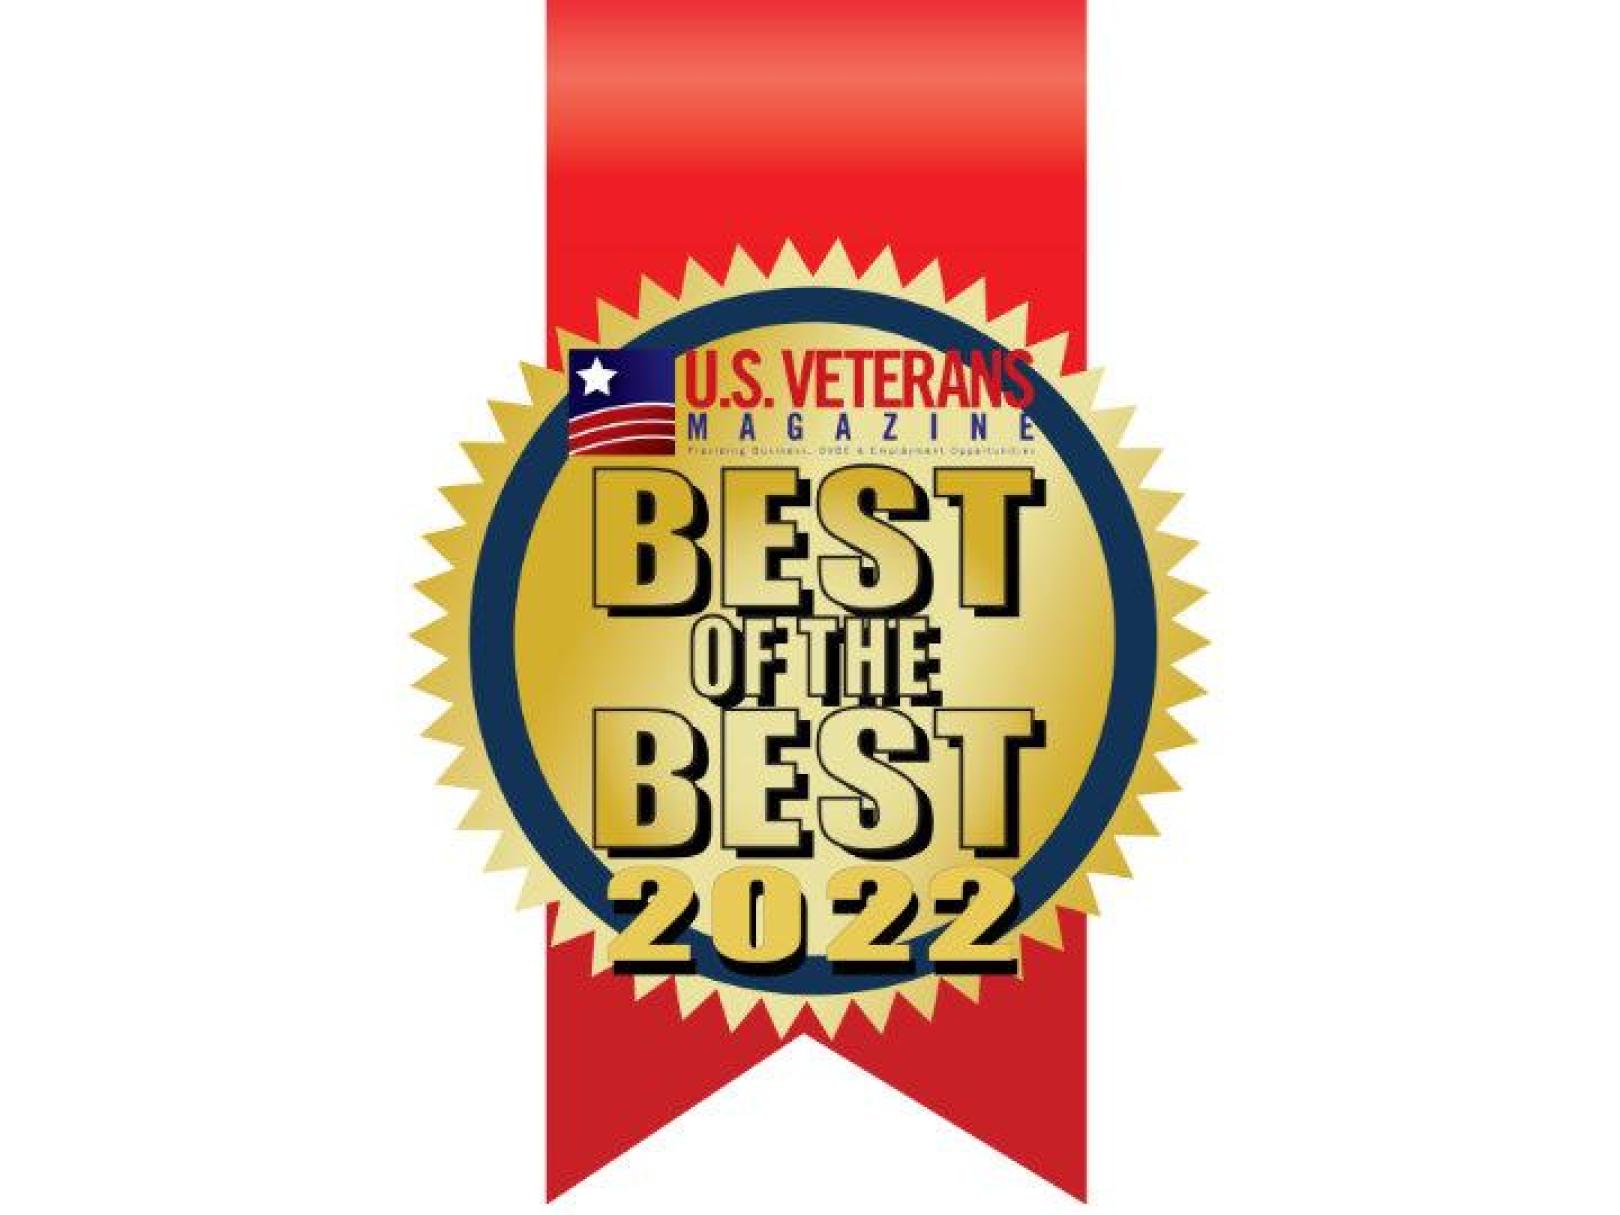 U.S. Veterans Magazine 2022 Best of the Best